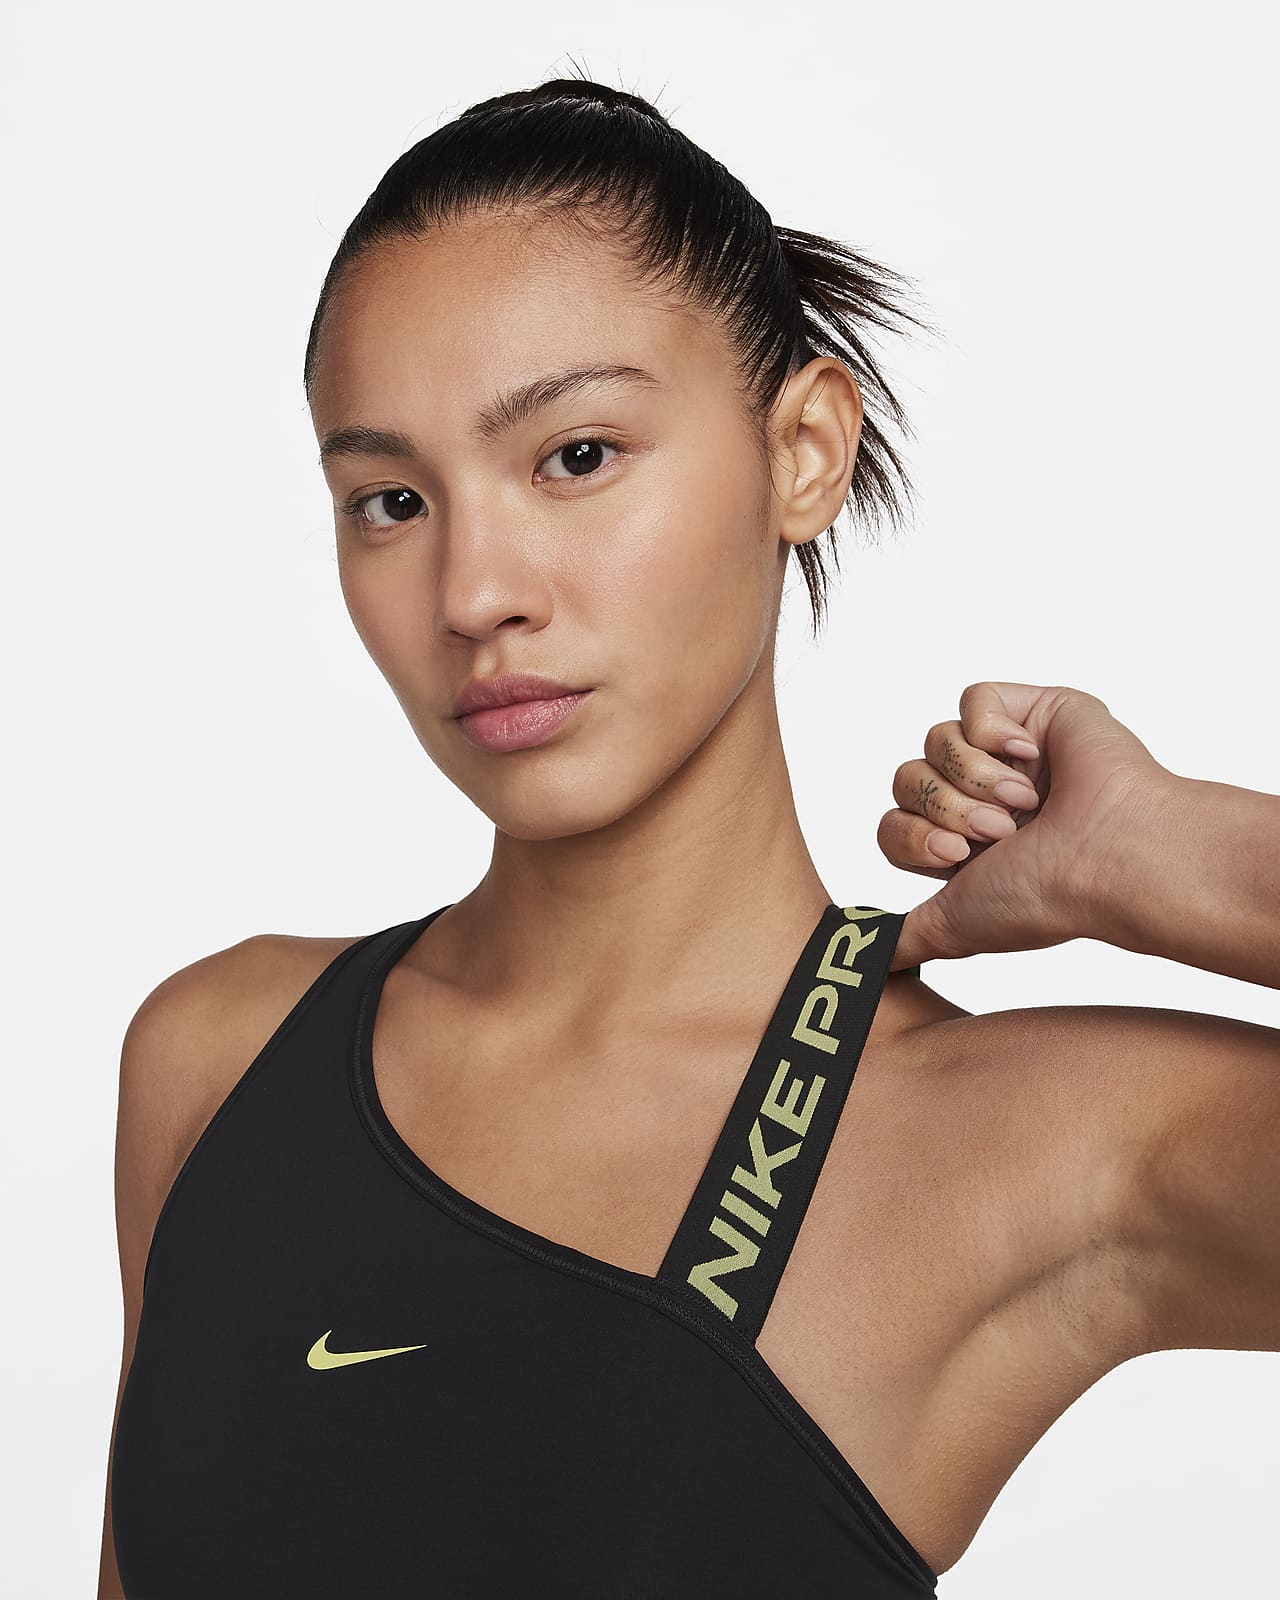 Nike Women's Pro Swoosh Medium-support Asymmetrical Sports Bra In Red